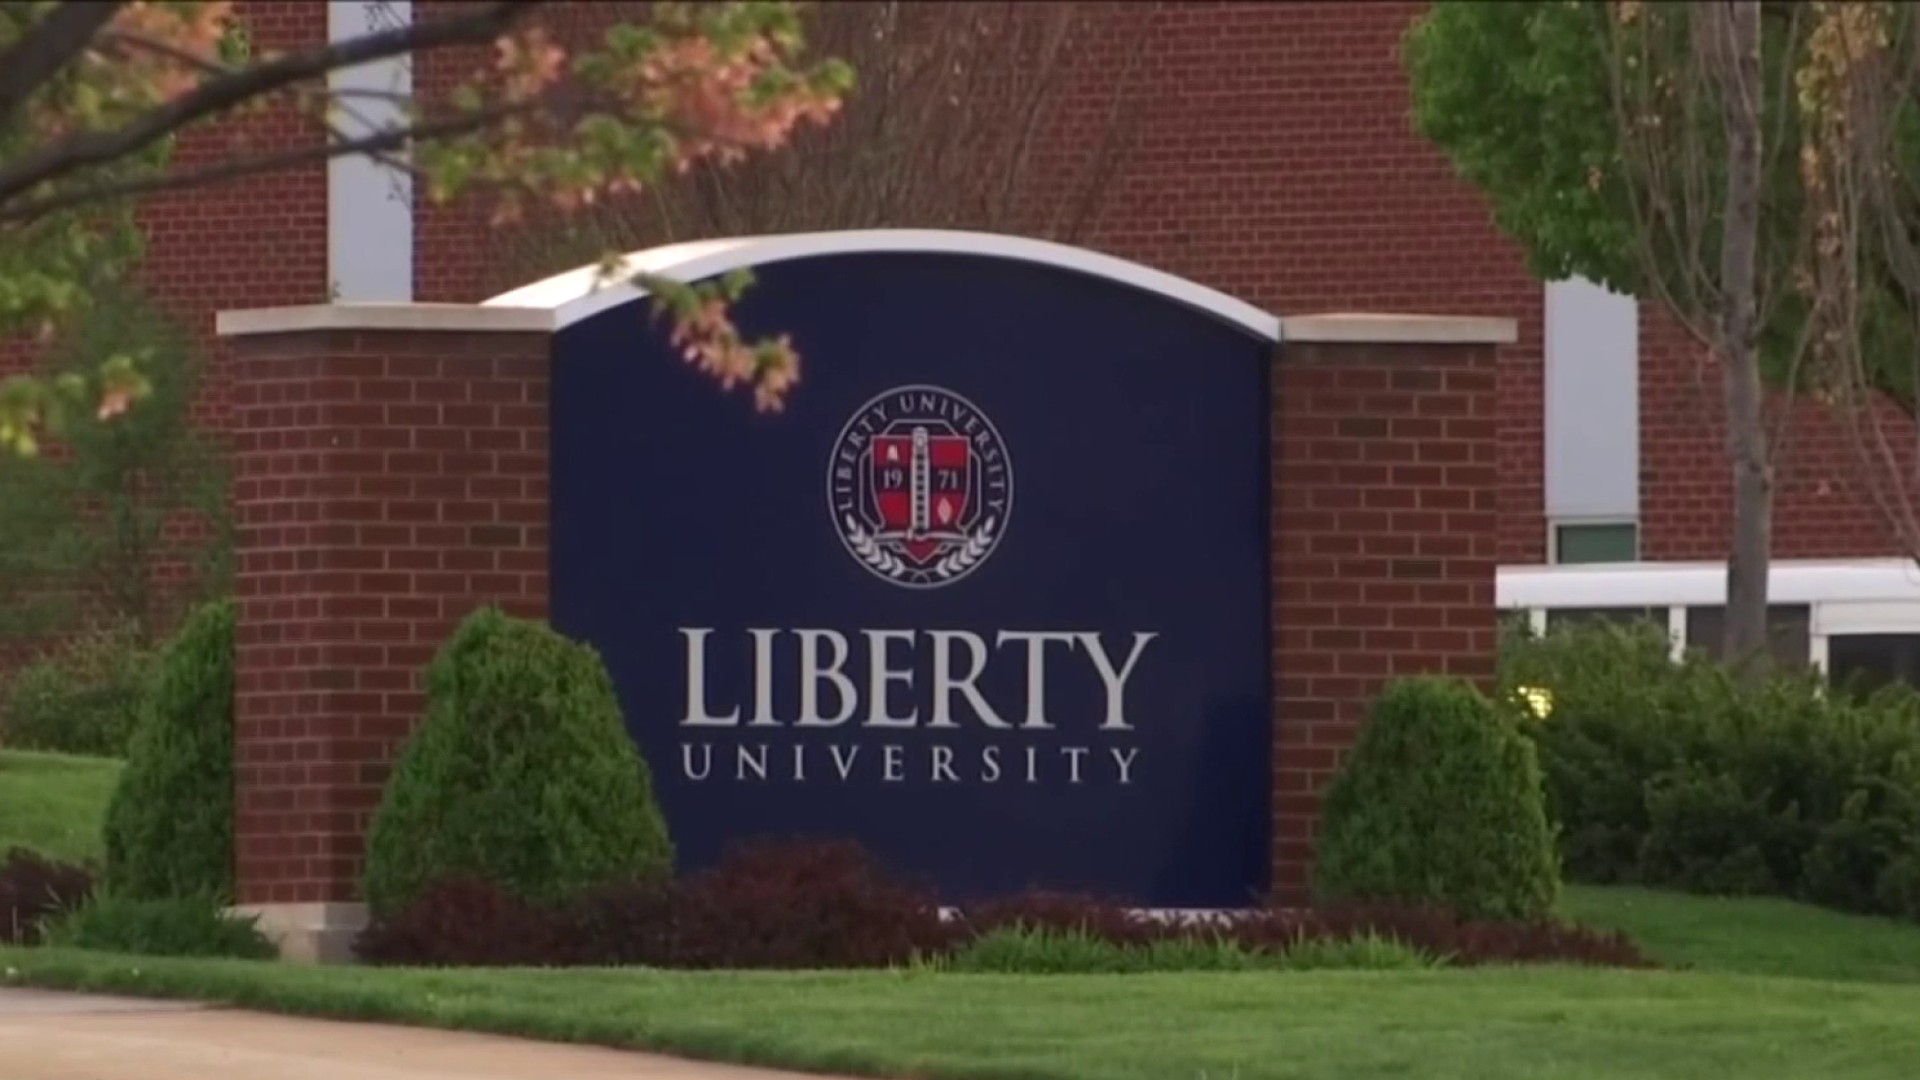 liberty university logo